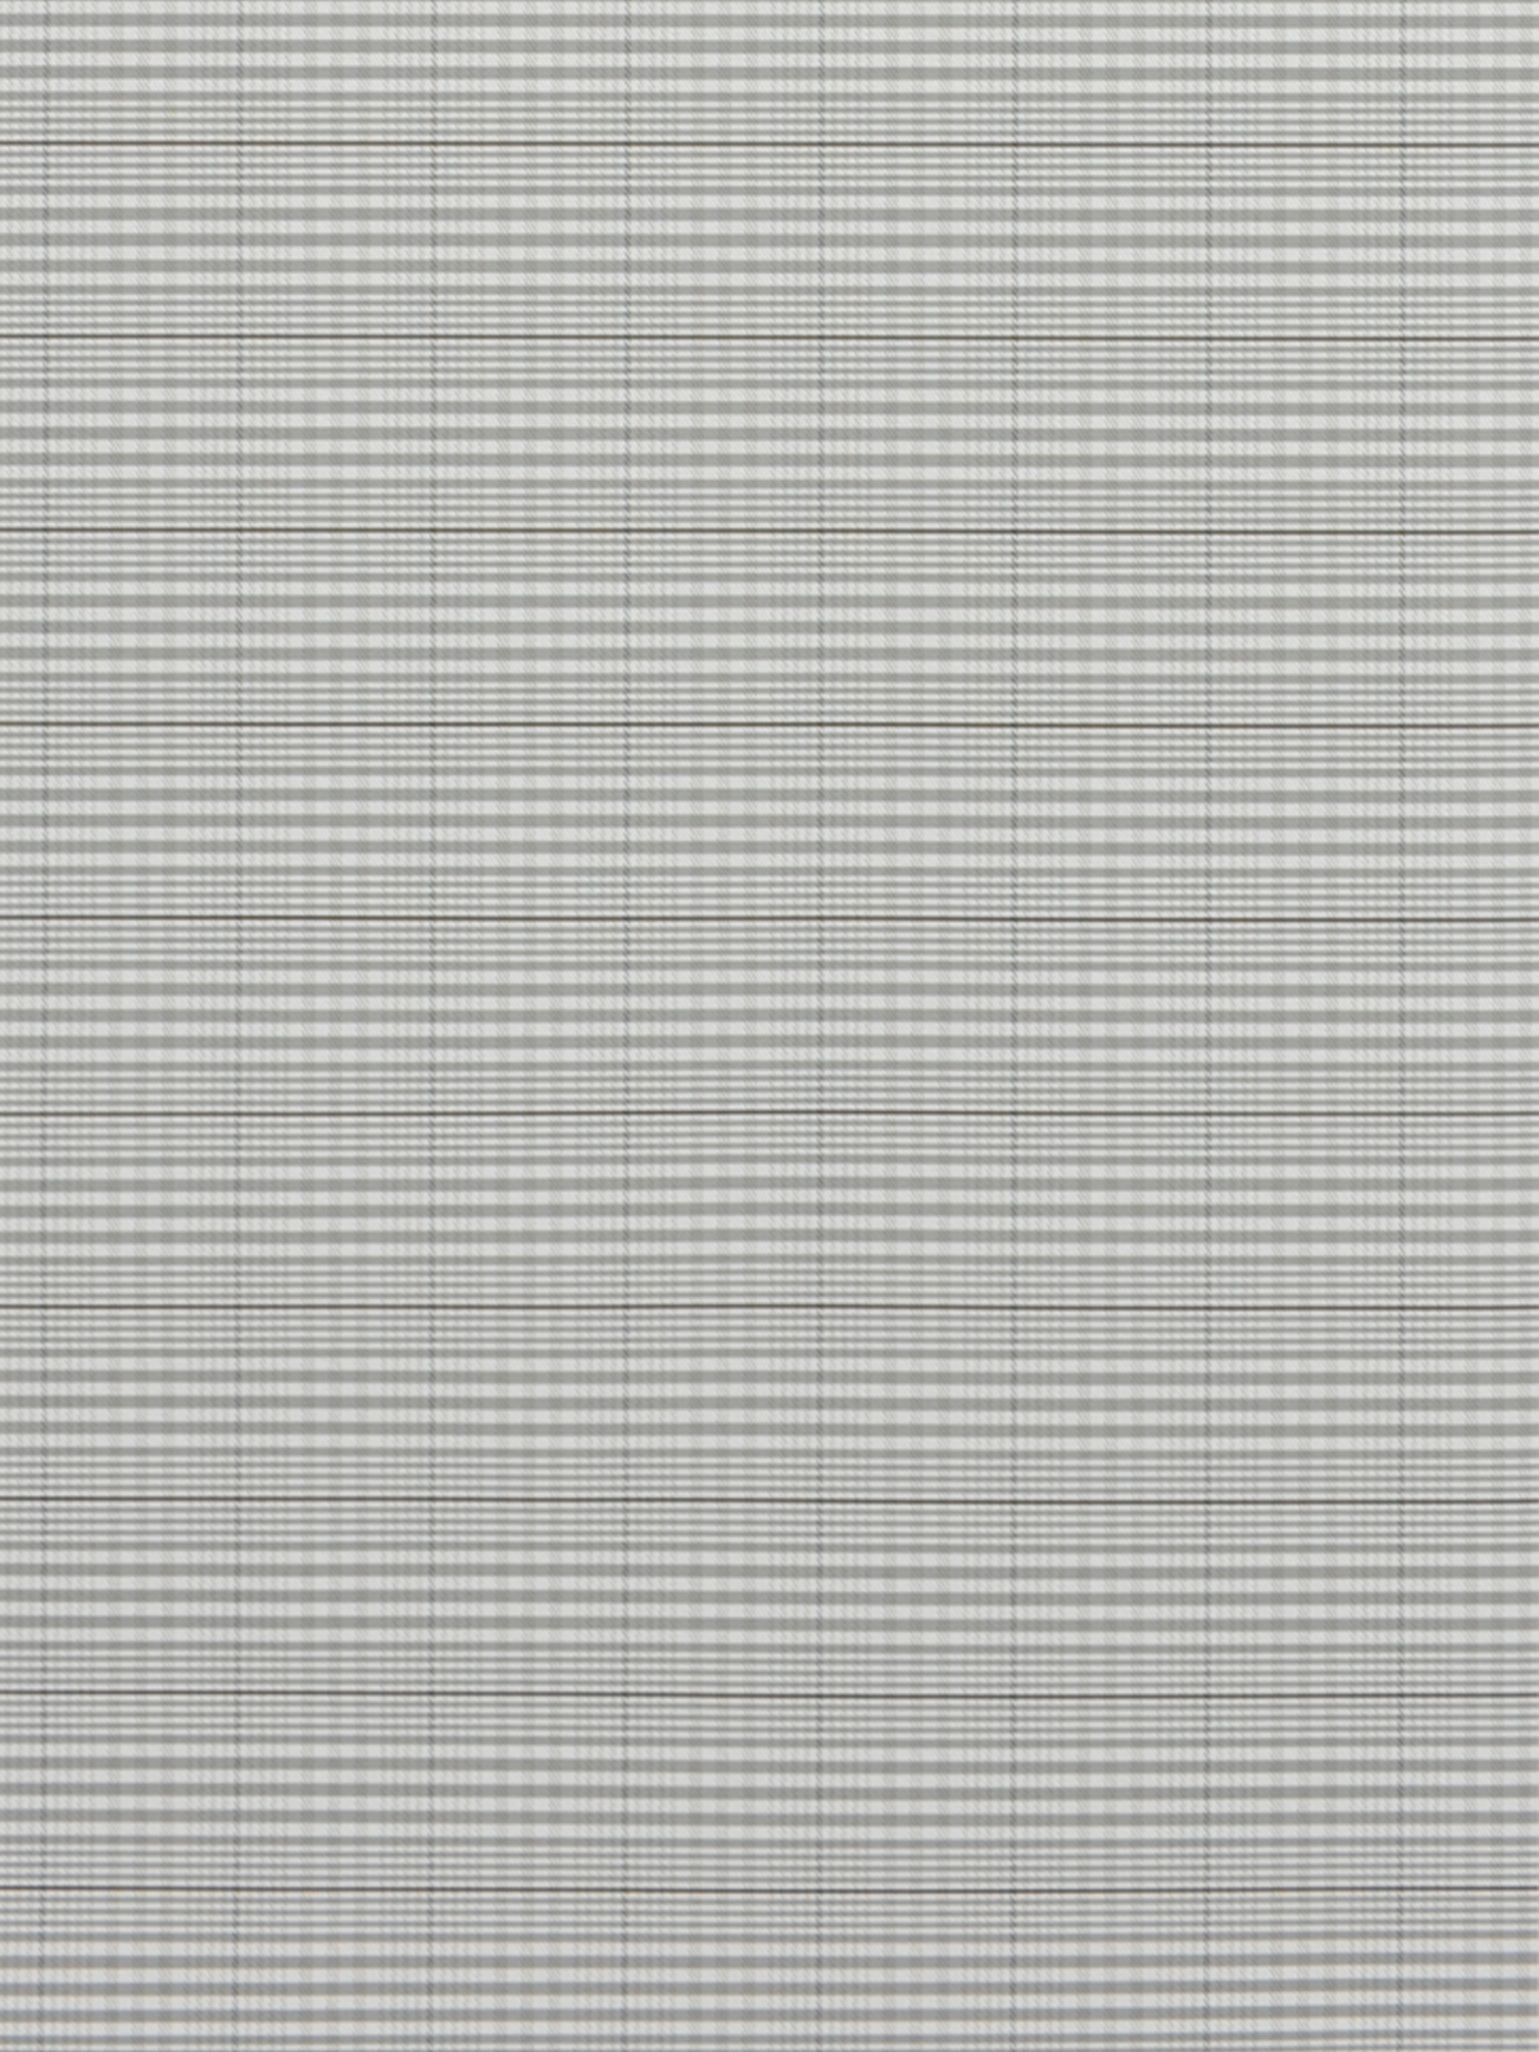 Ralph Lauren Barrington Plaid Wallpaper, Black/Grey, Prl019/06